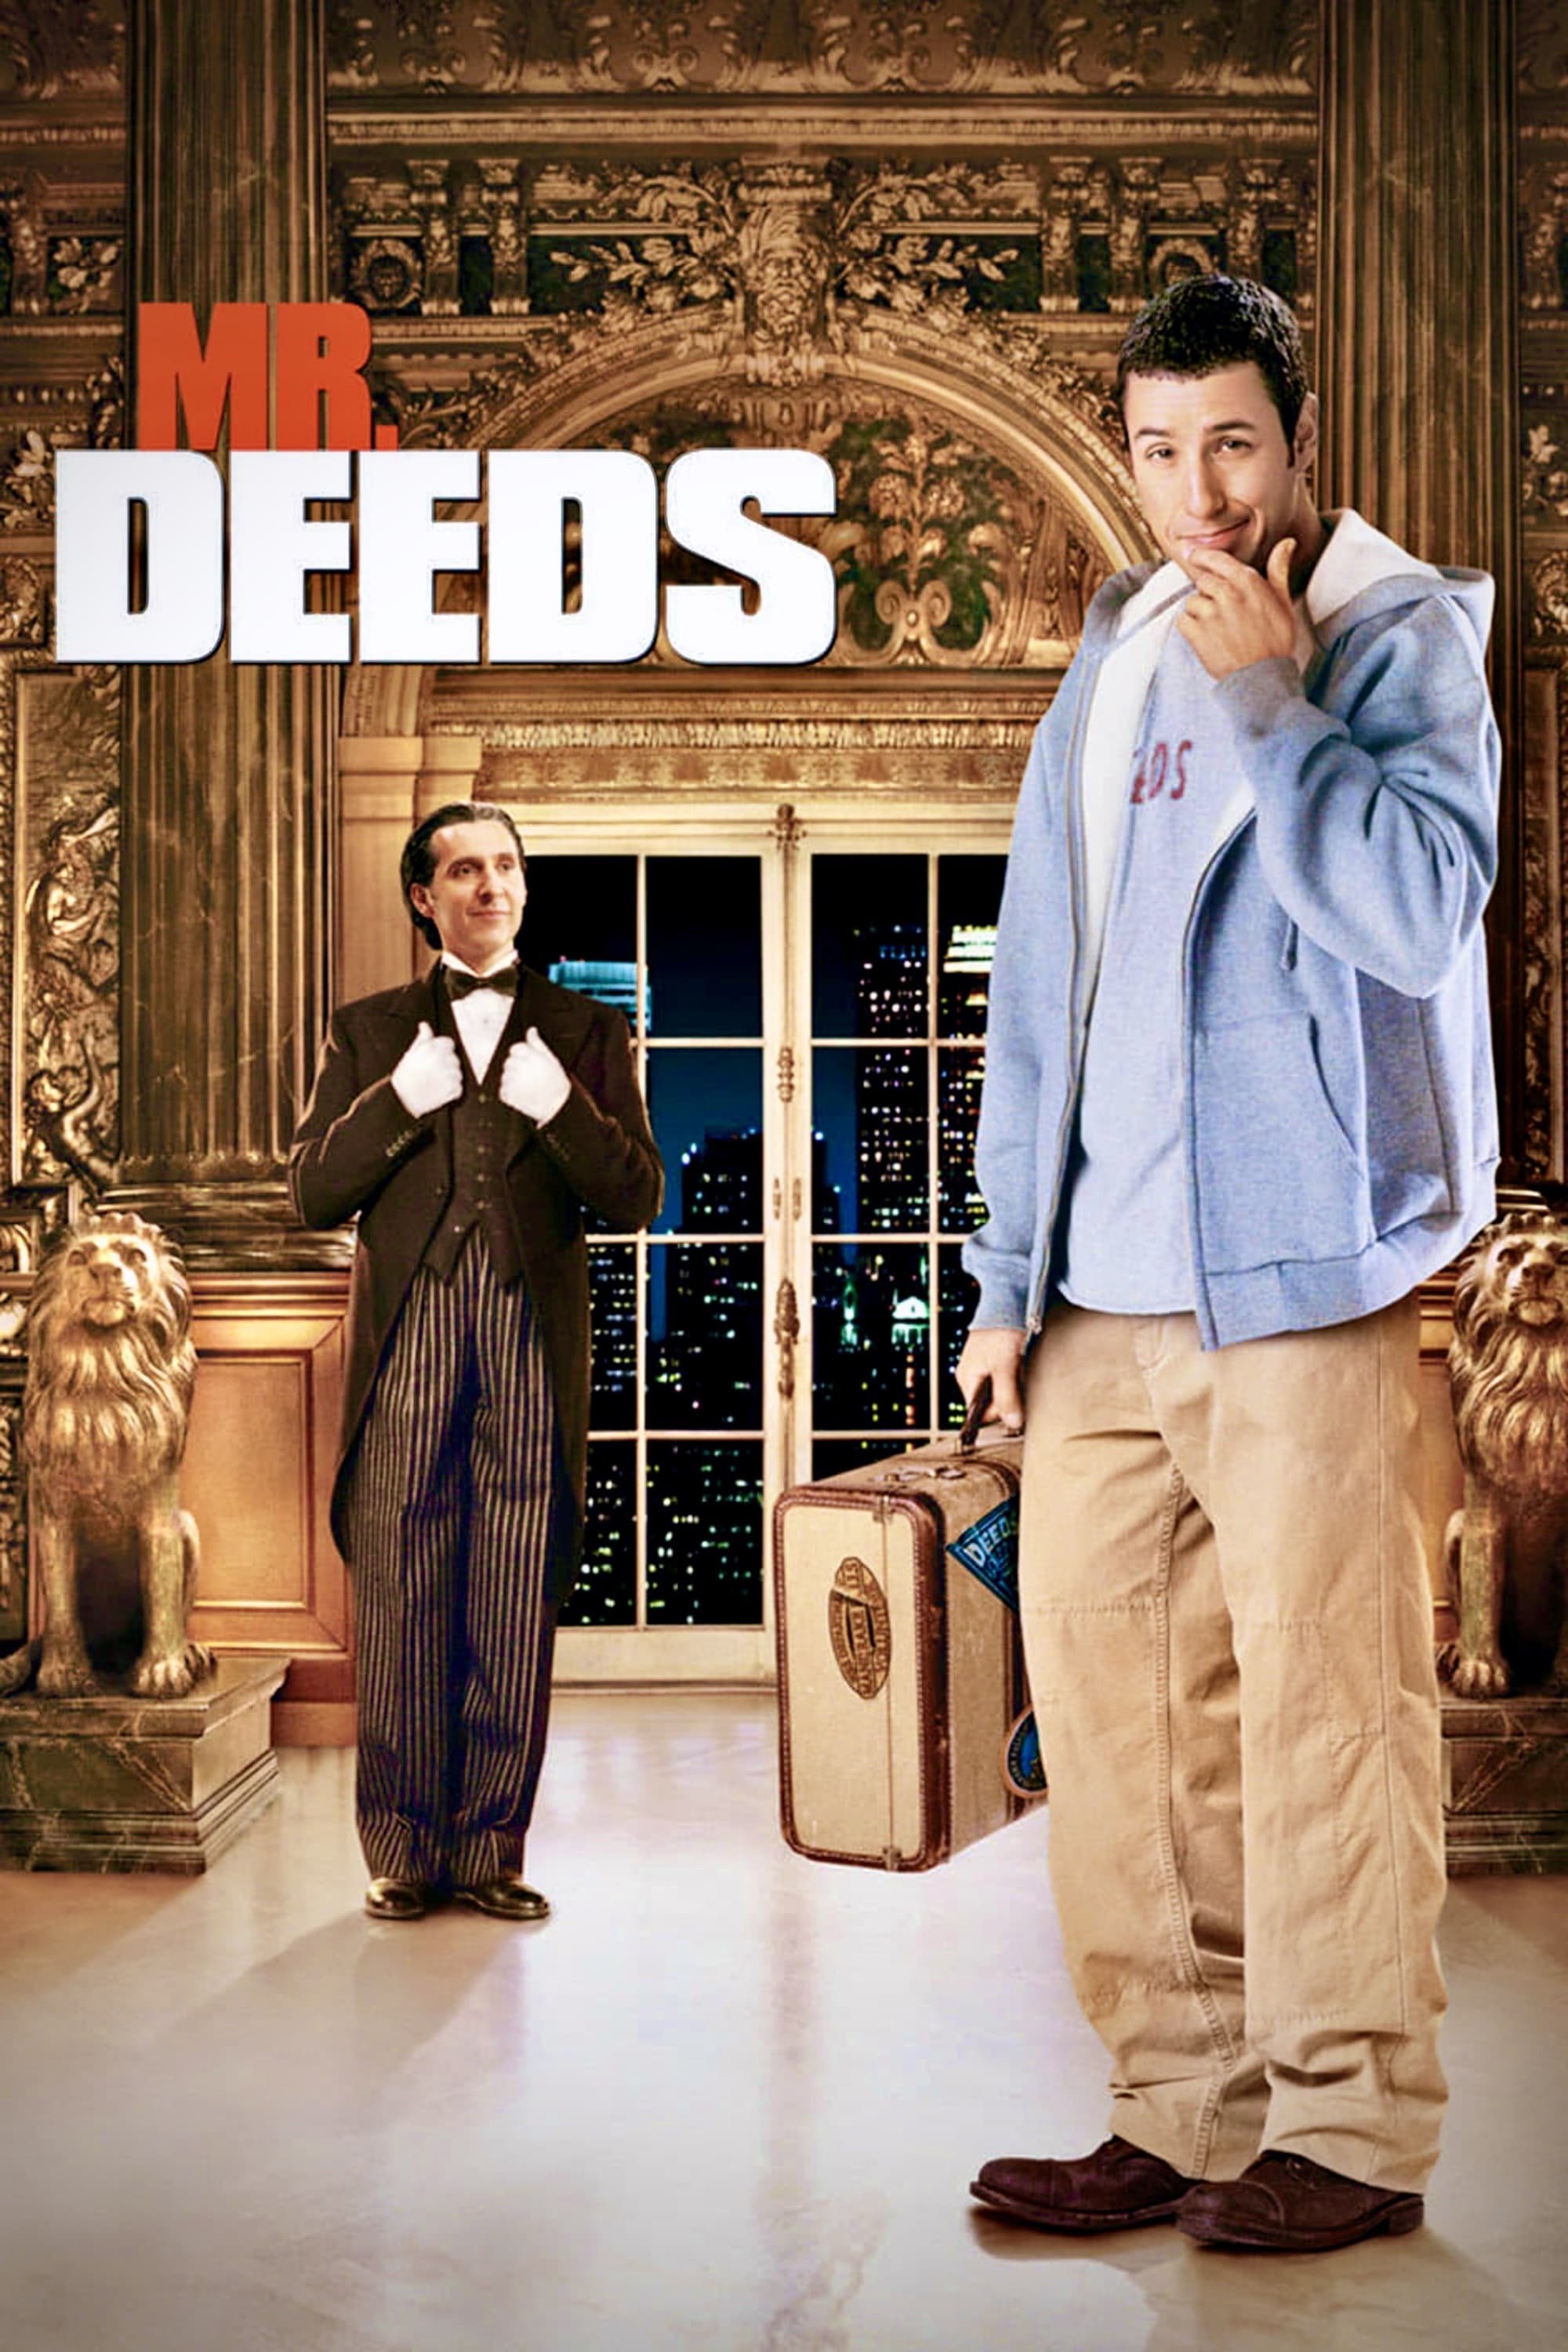 Mr. Deeds film